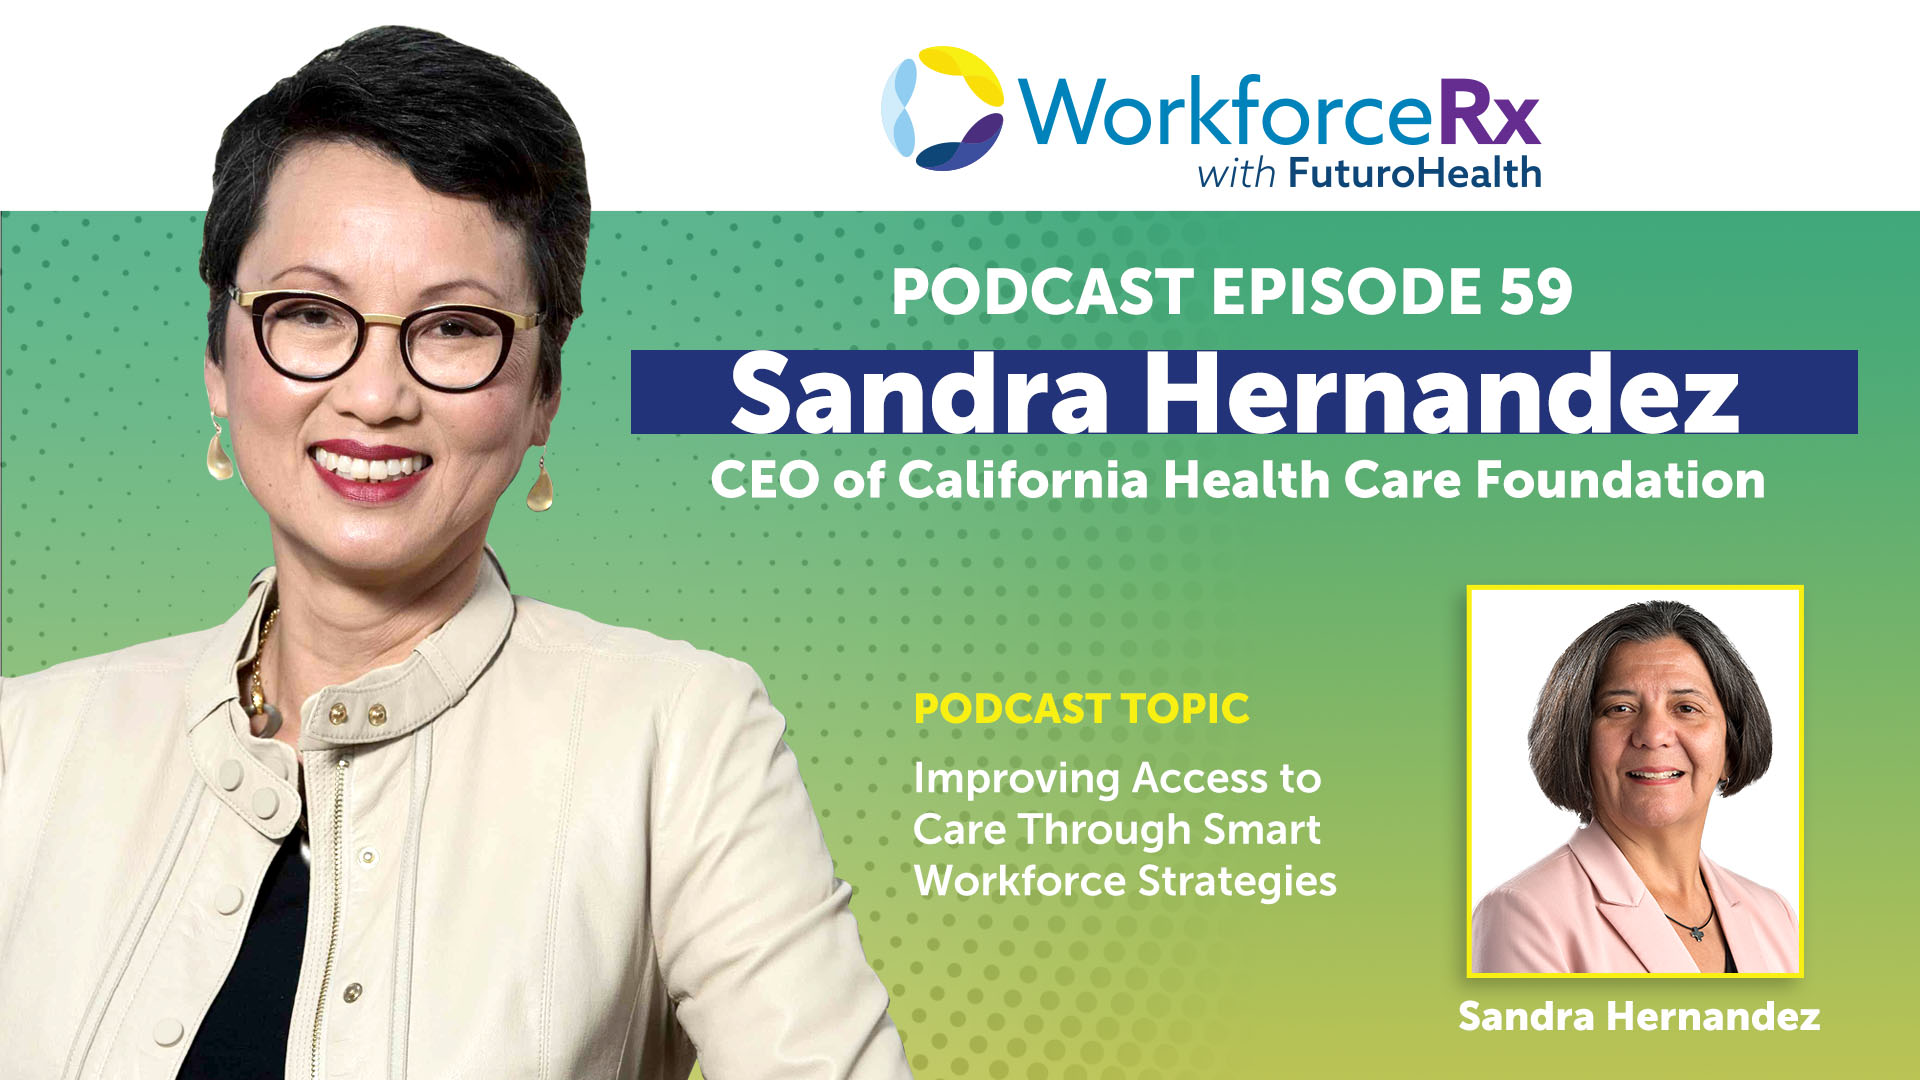 EP59_WorkforceRx_Podcast_Sandra_Hernandez